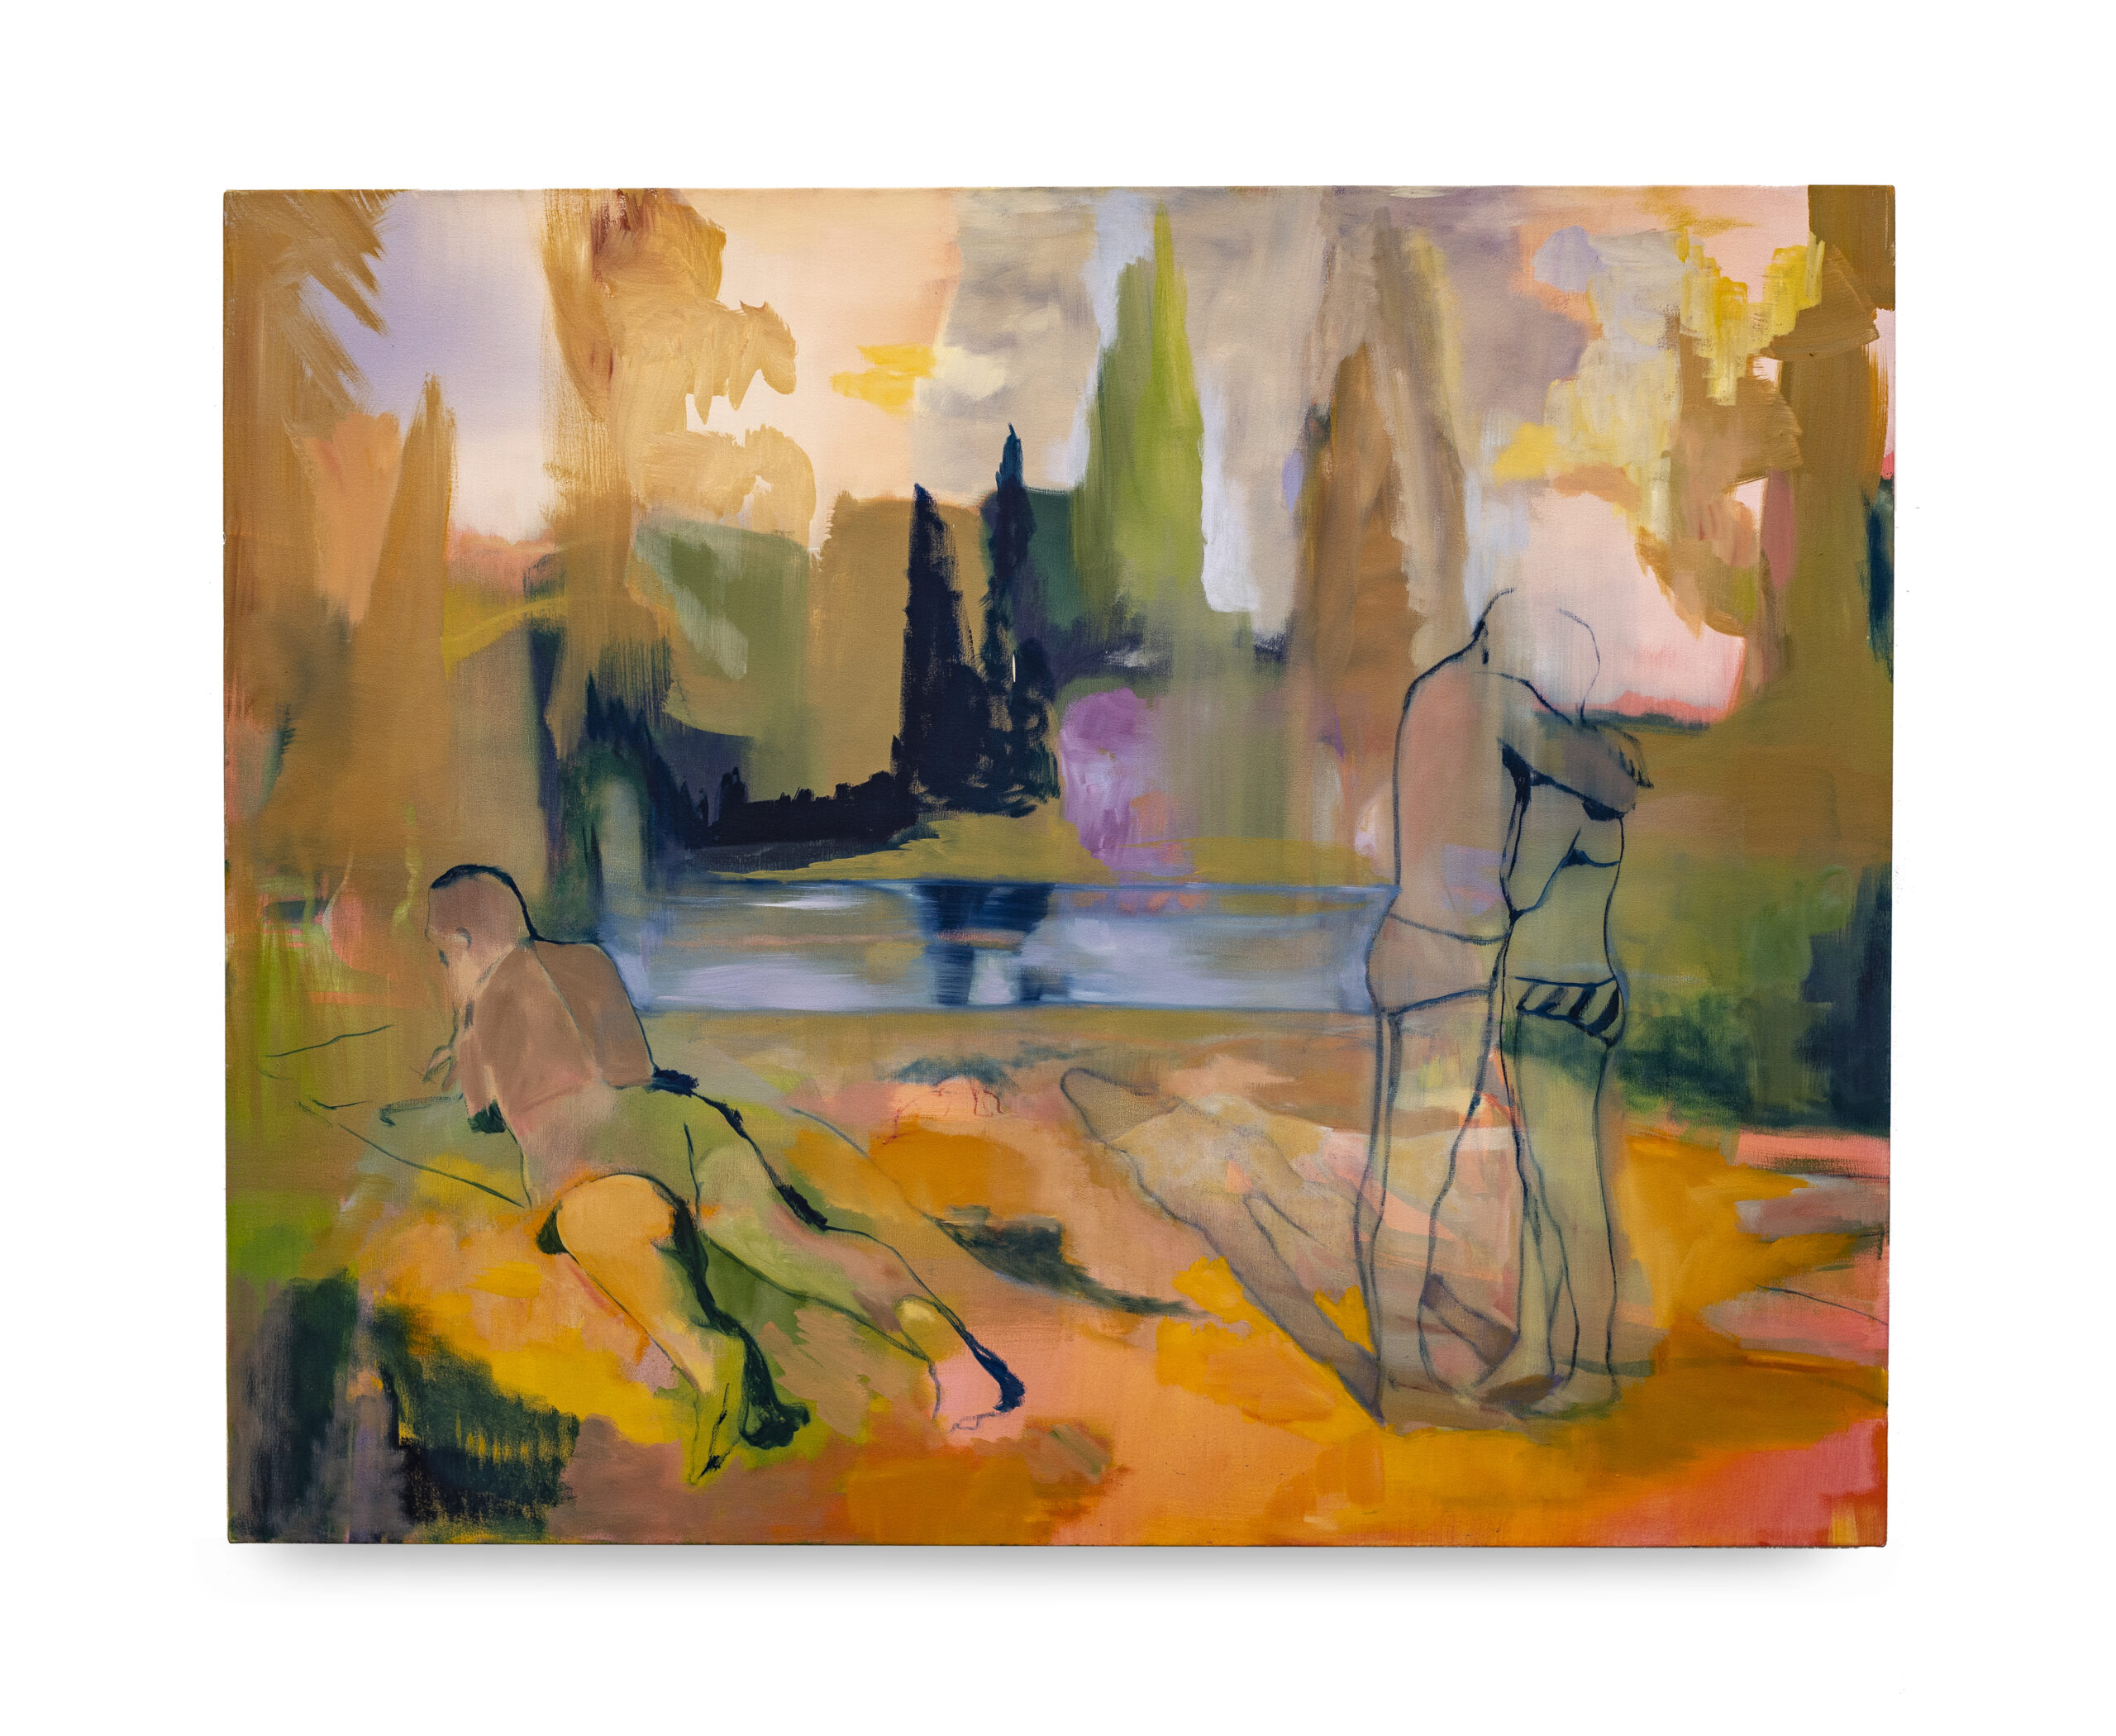 Kate Gottgens. Last Light, 2022. Oil on Canvas. 110 x 135 cm (Image courtesy of SMAC Gallery, artwork copyright of Kate Gottgens)